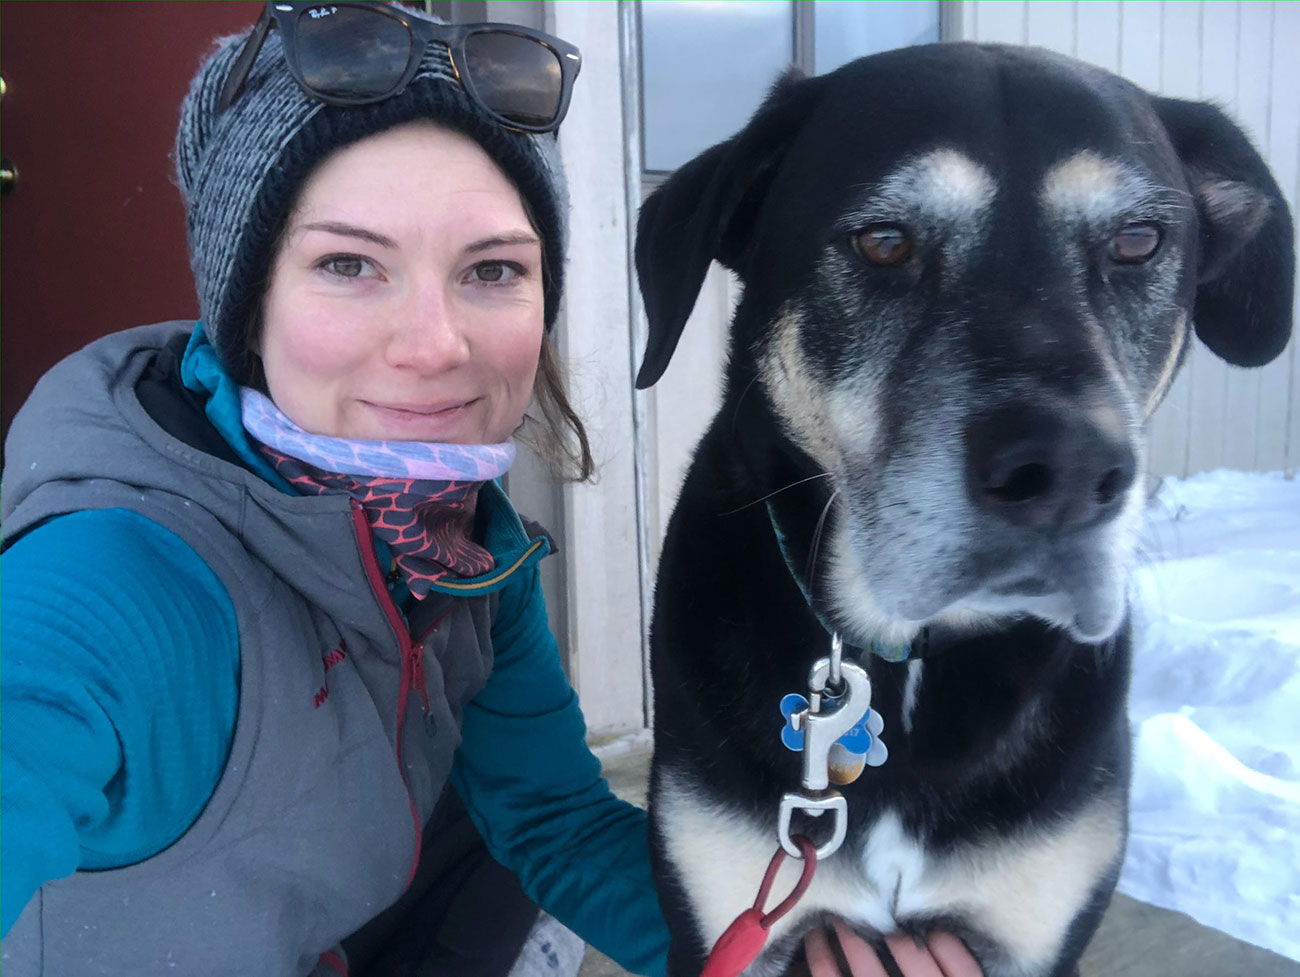 Kim Dahm and her dog in Alaska